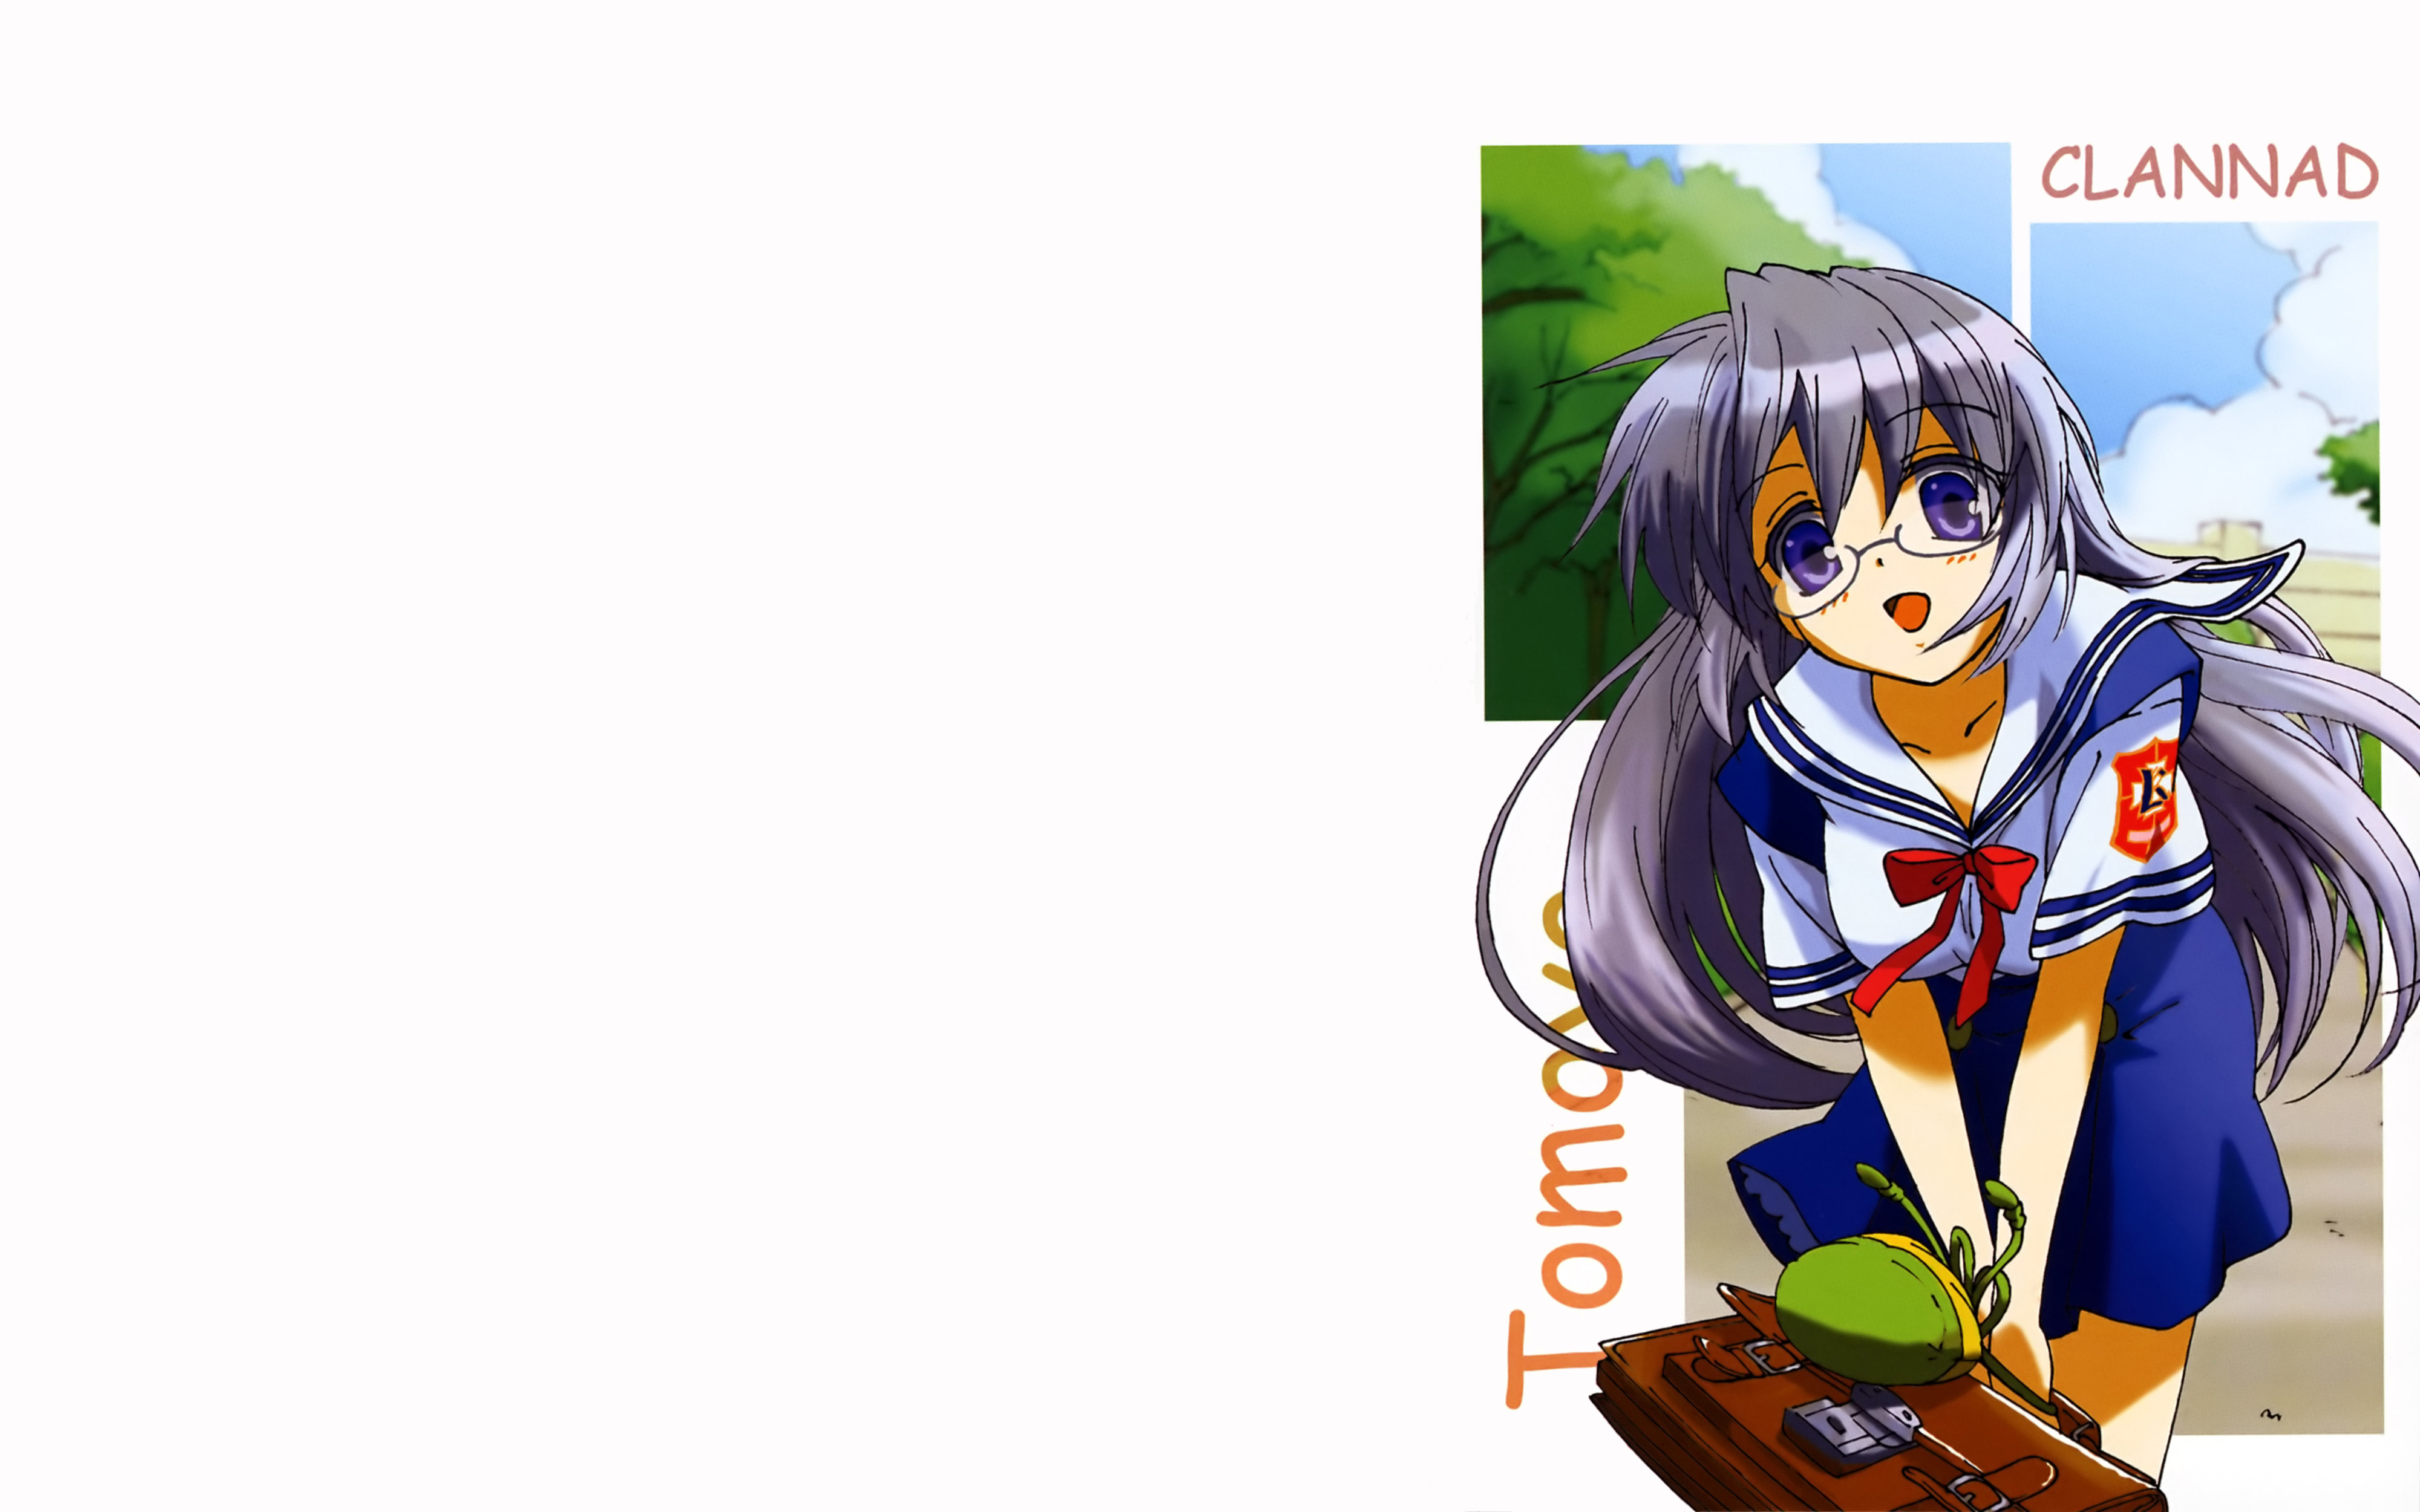 Free download wallpaper Anime, Clannad, Tomoyo Sakagami on your PC desktop